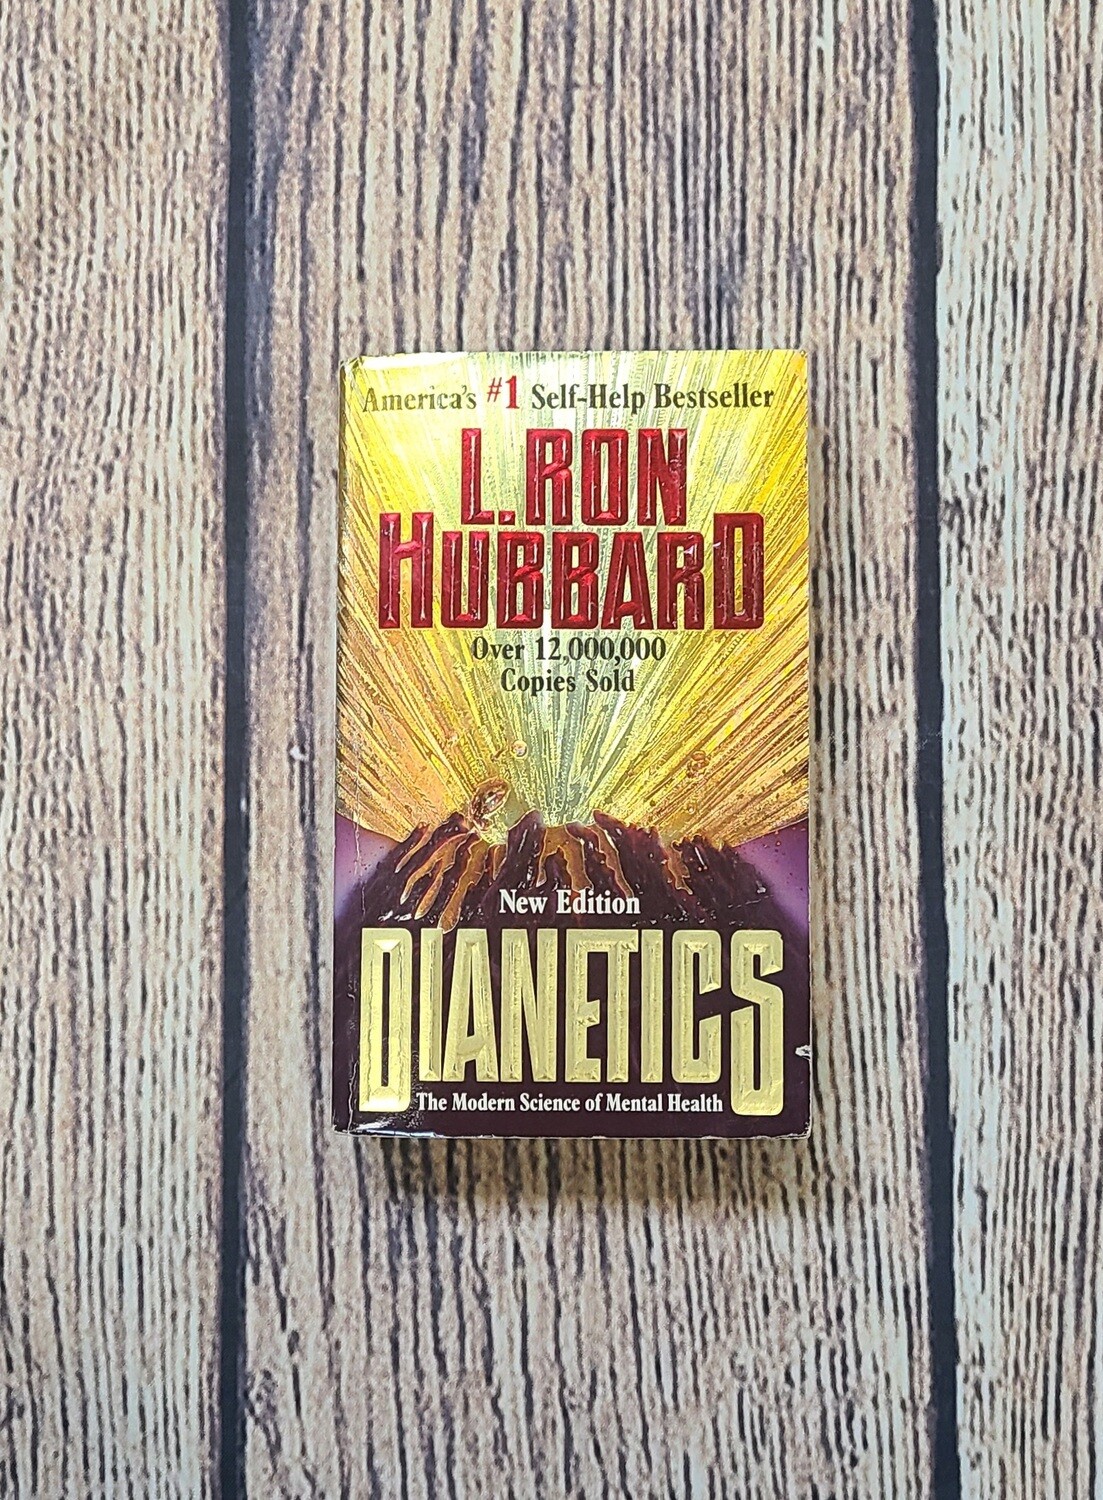 Dianetics by L. Ron Hubbard